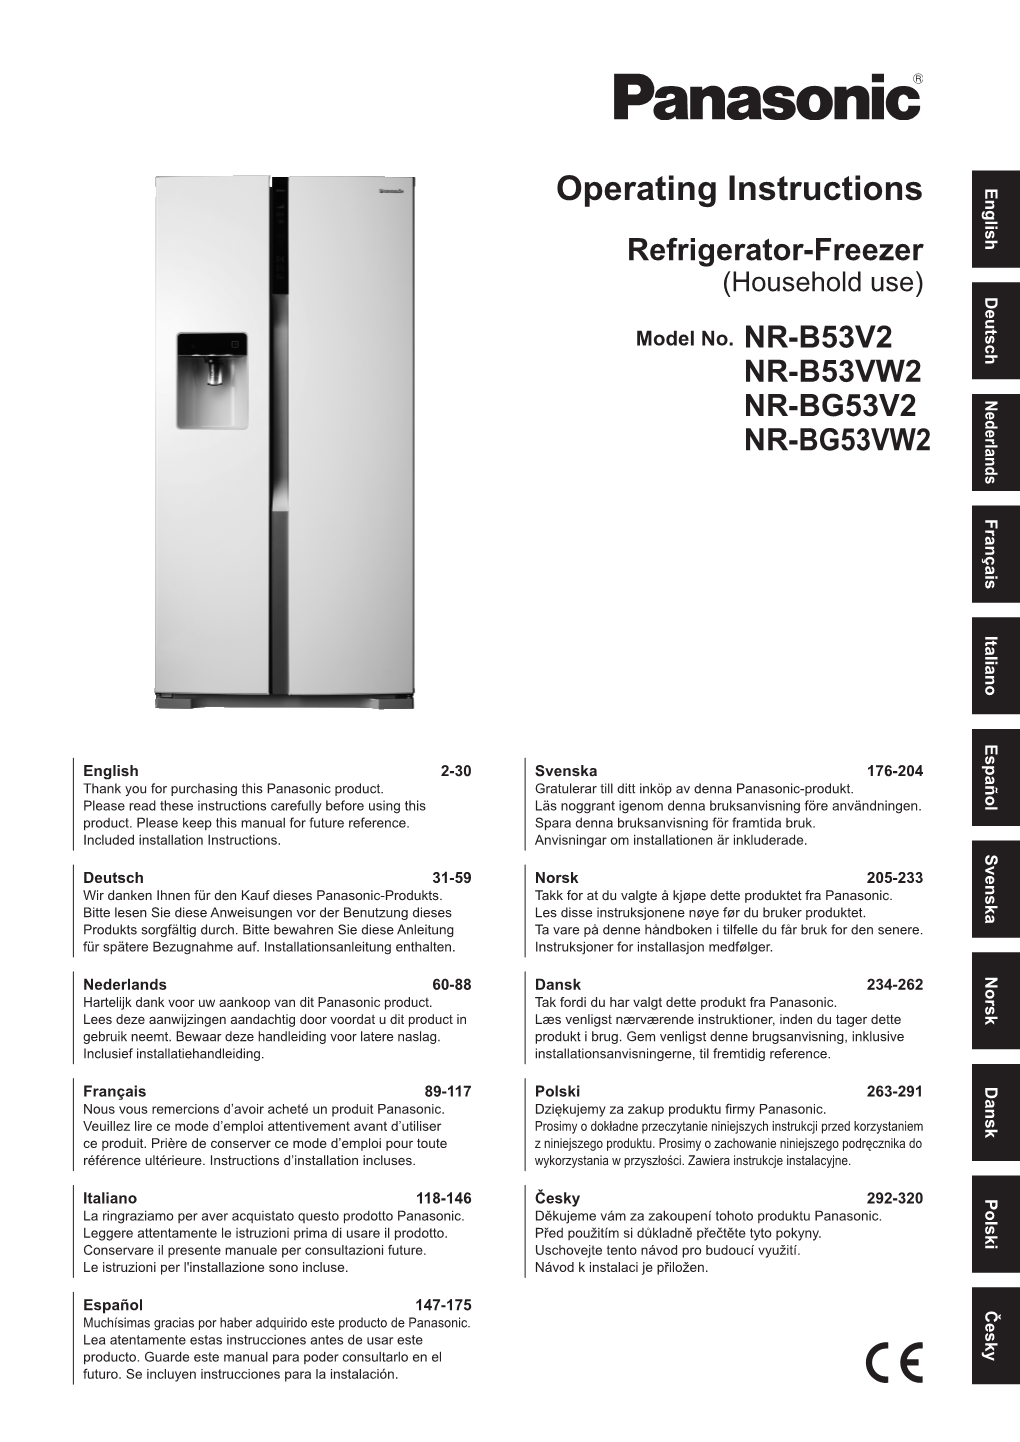 Operating Instructions English Refrigerator-Freezer